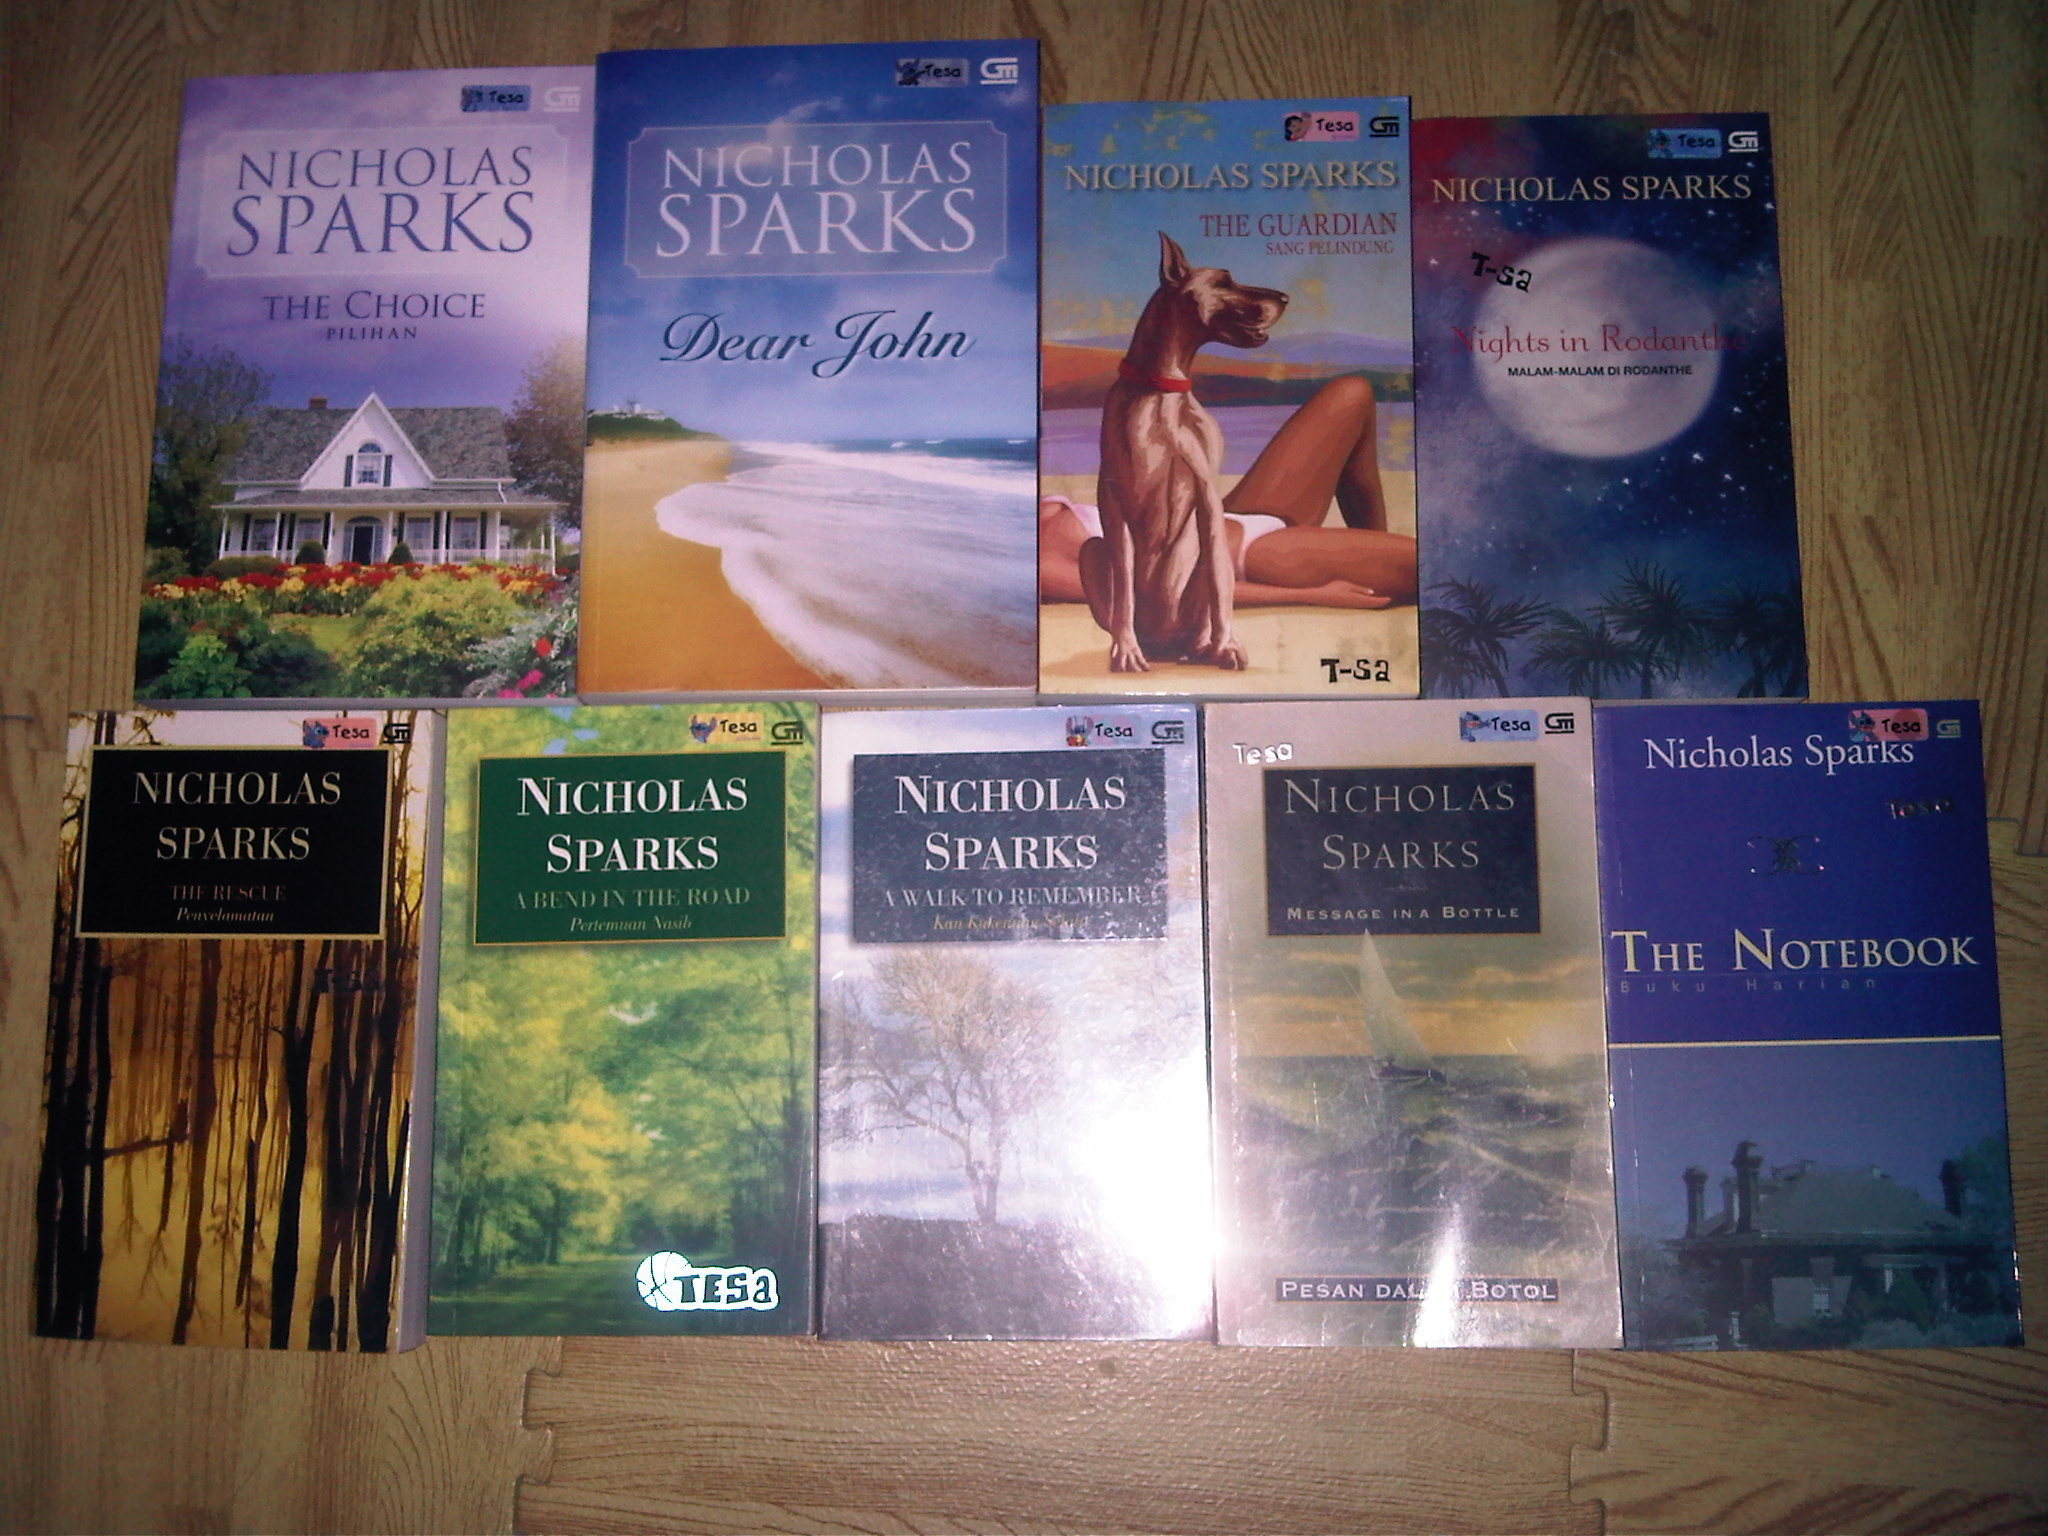 indonesian version of nicholas sparks books